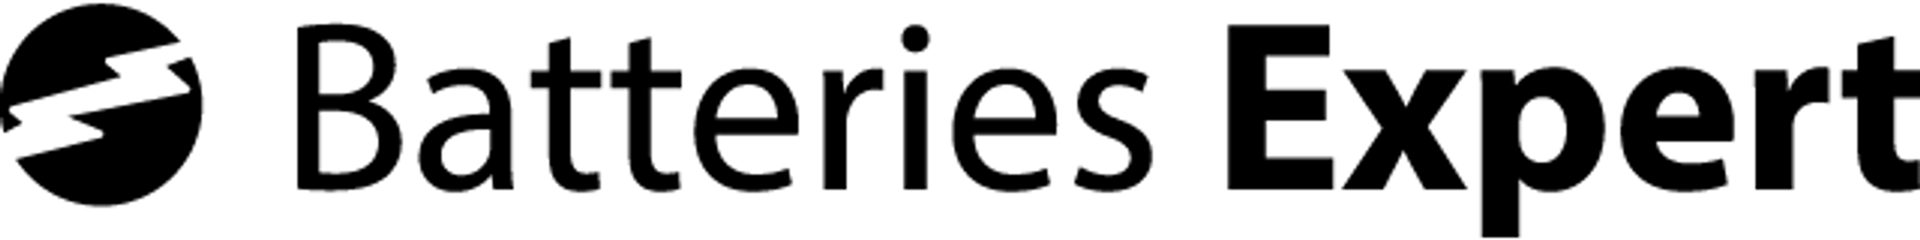 BATTERIES EXPERT logo de circulaires